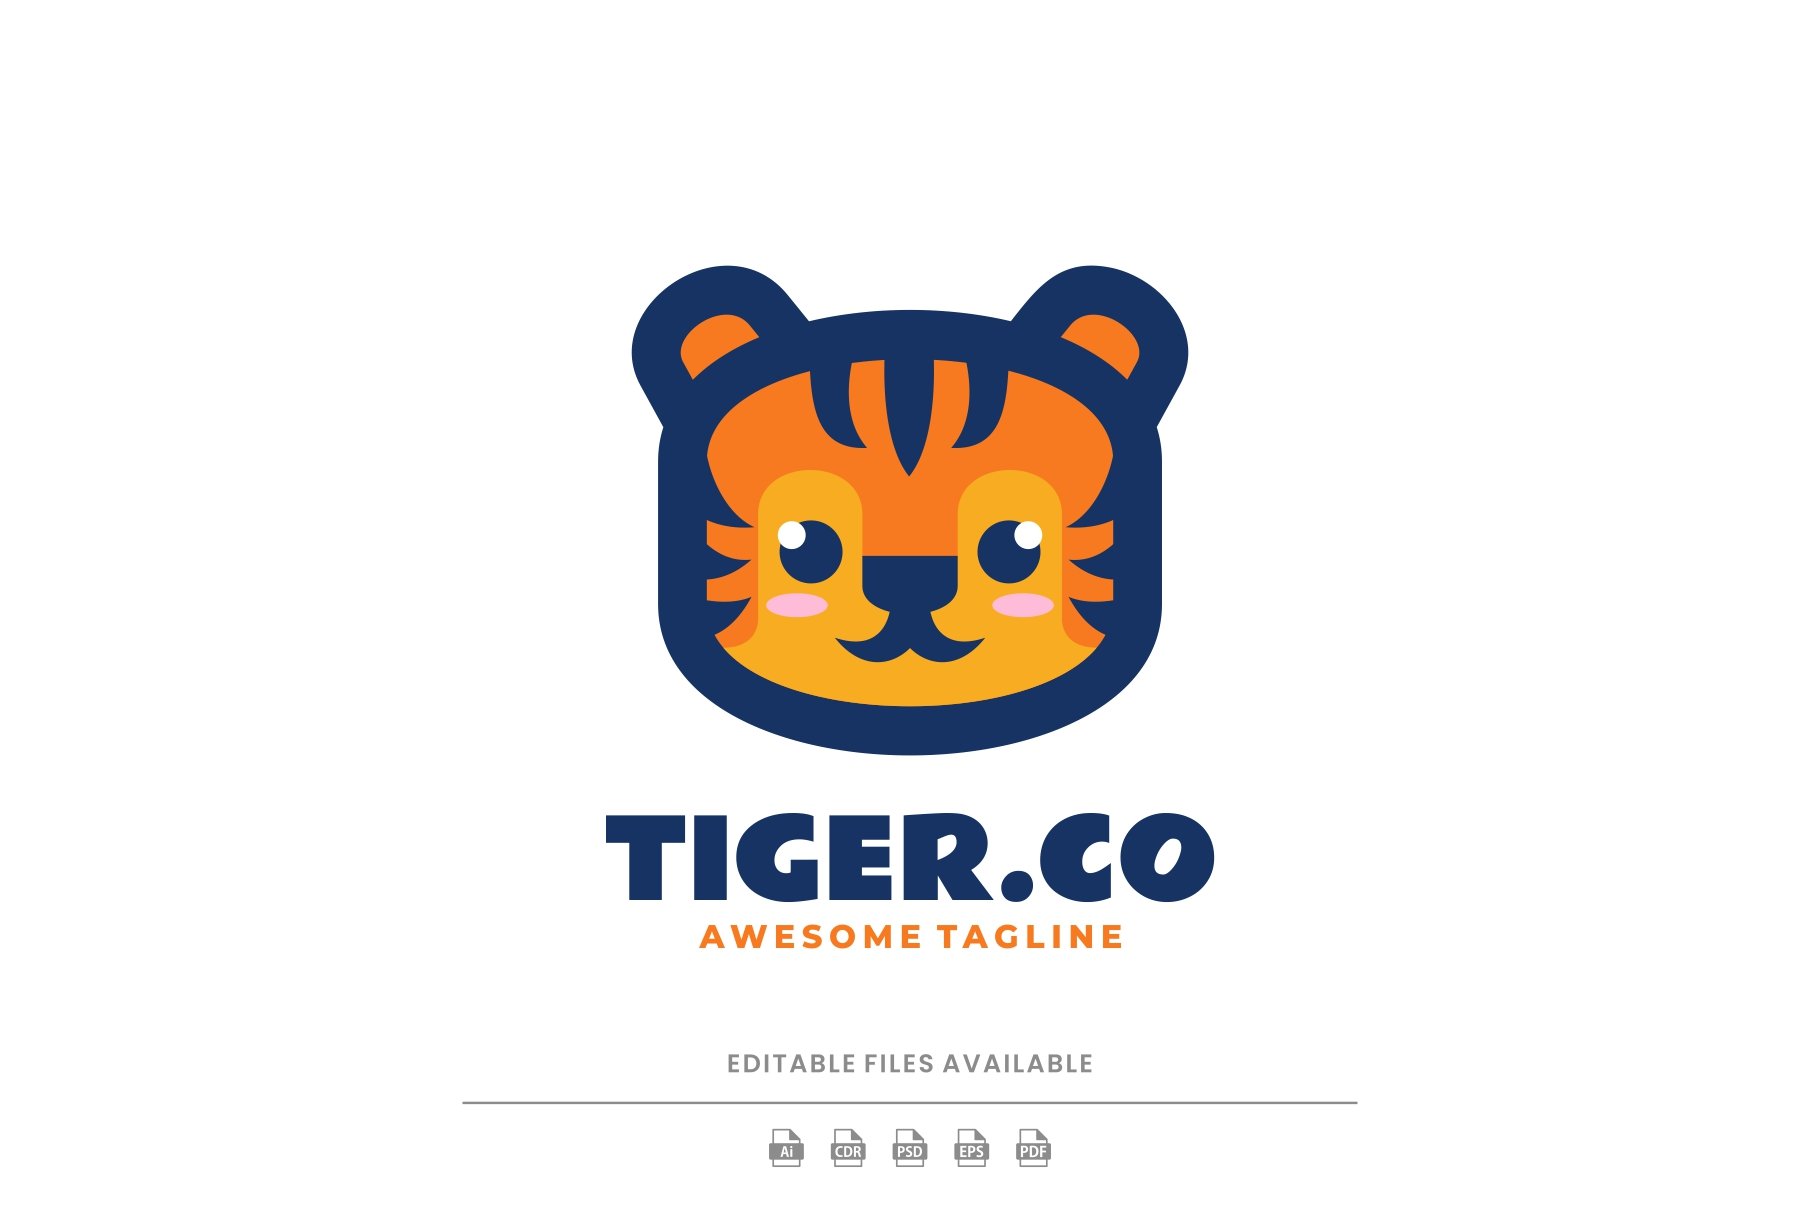 Tiger Simple Mascot Logo cover image.